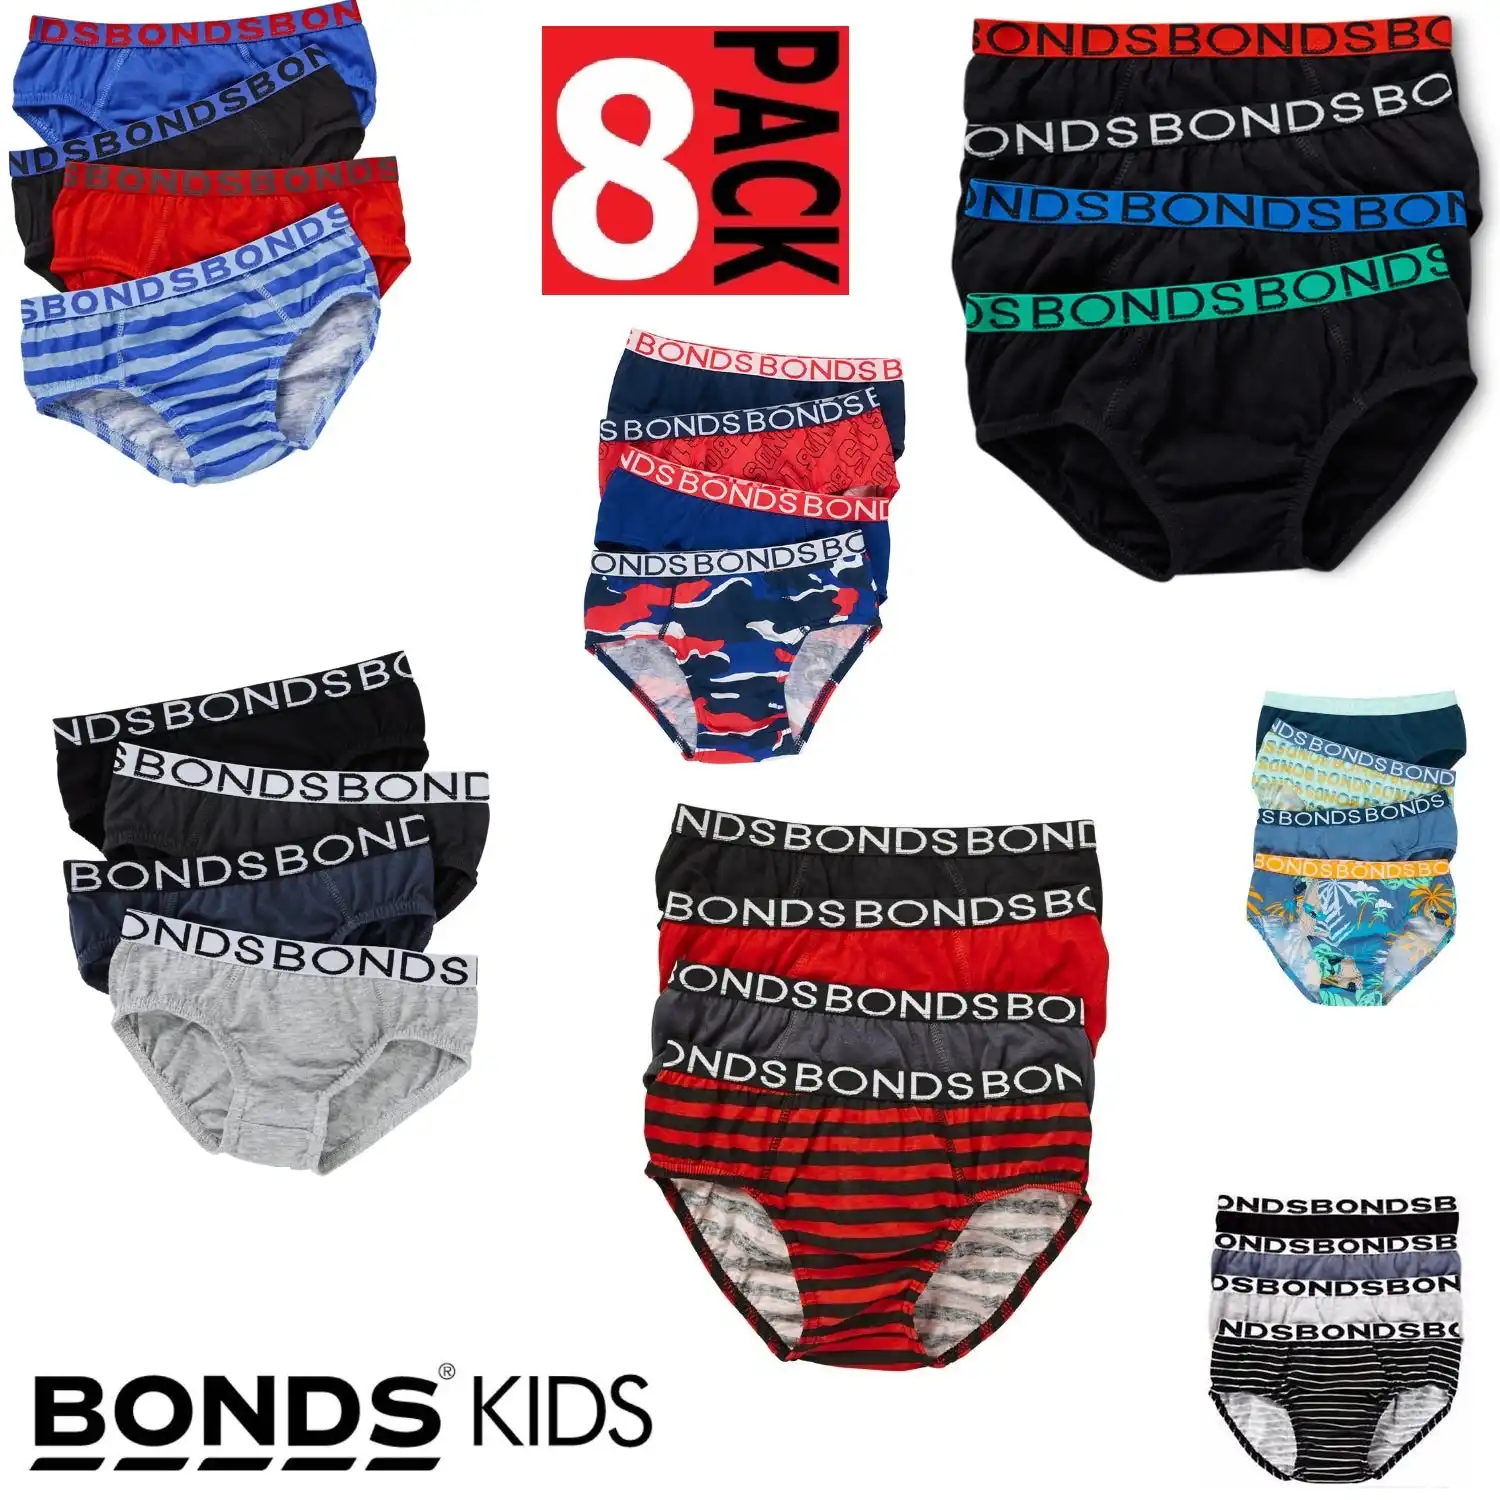 8 x Bonds Boys Briefs Underwear Undies Jocks Random Mixed Patterned Kids Bottoms